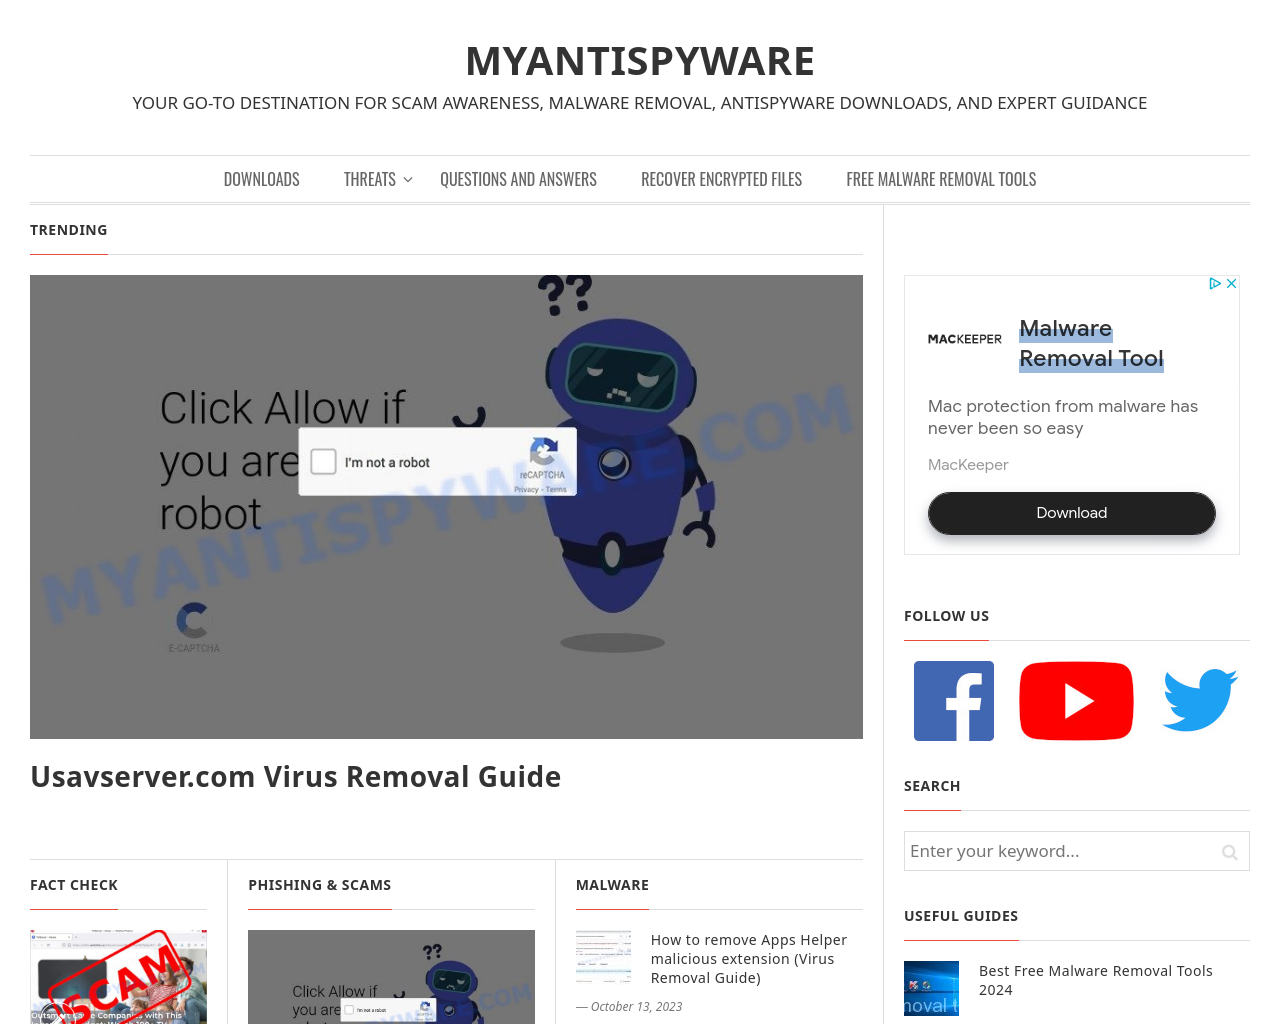 myantispyware.com